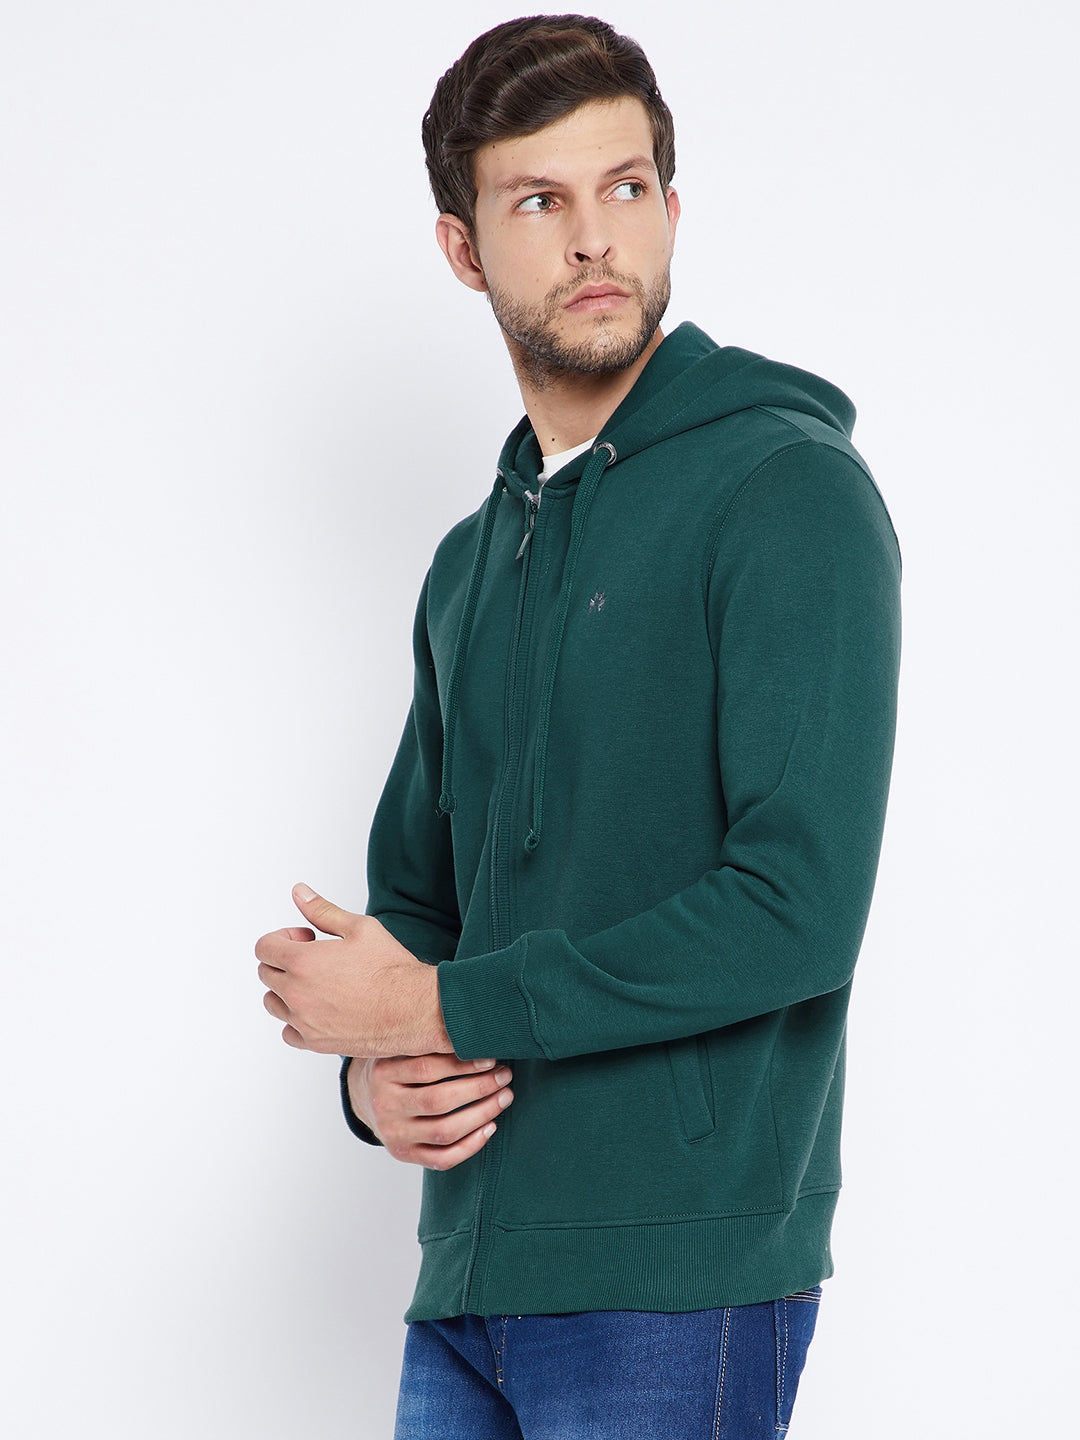 Green Hooded Sweatshirt - Men Sweatshirts